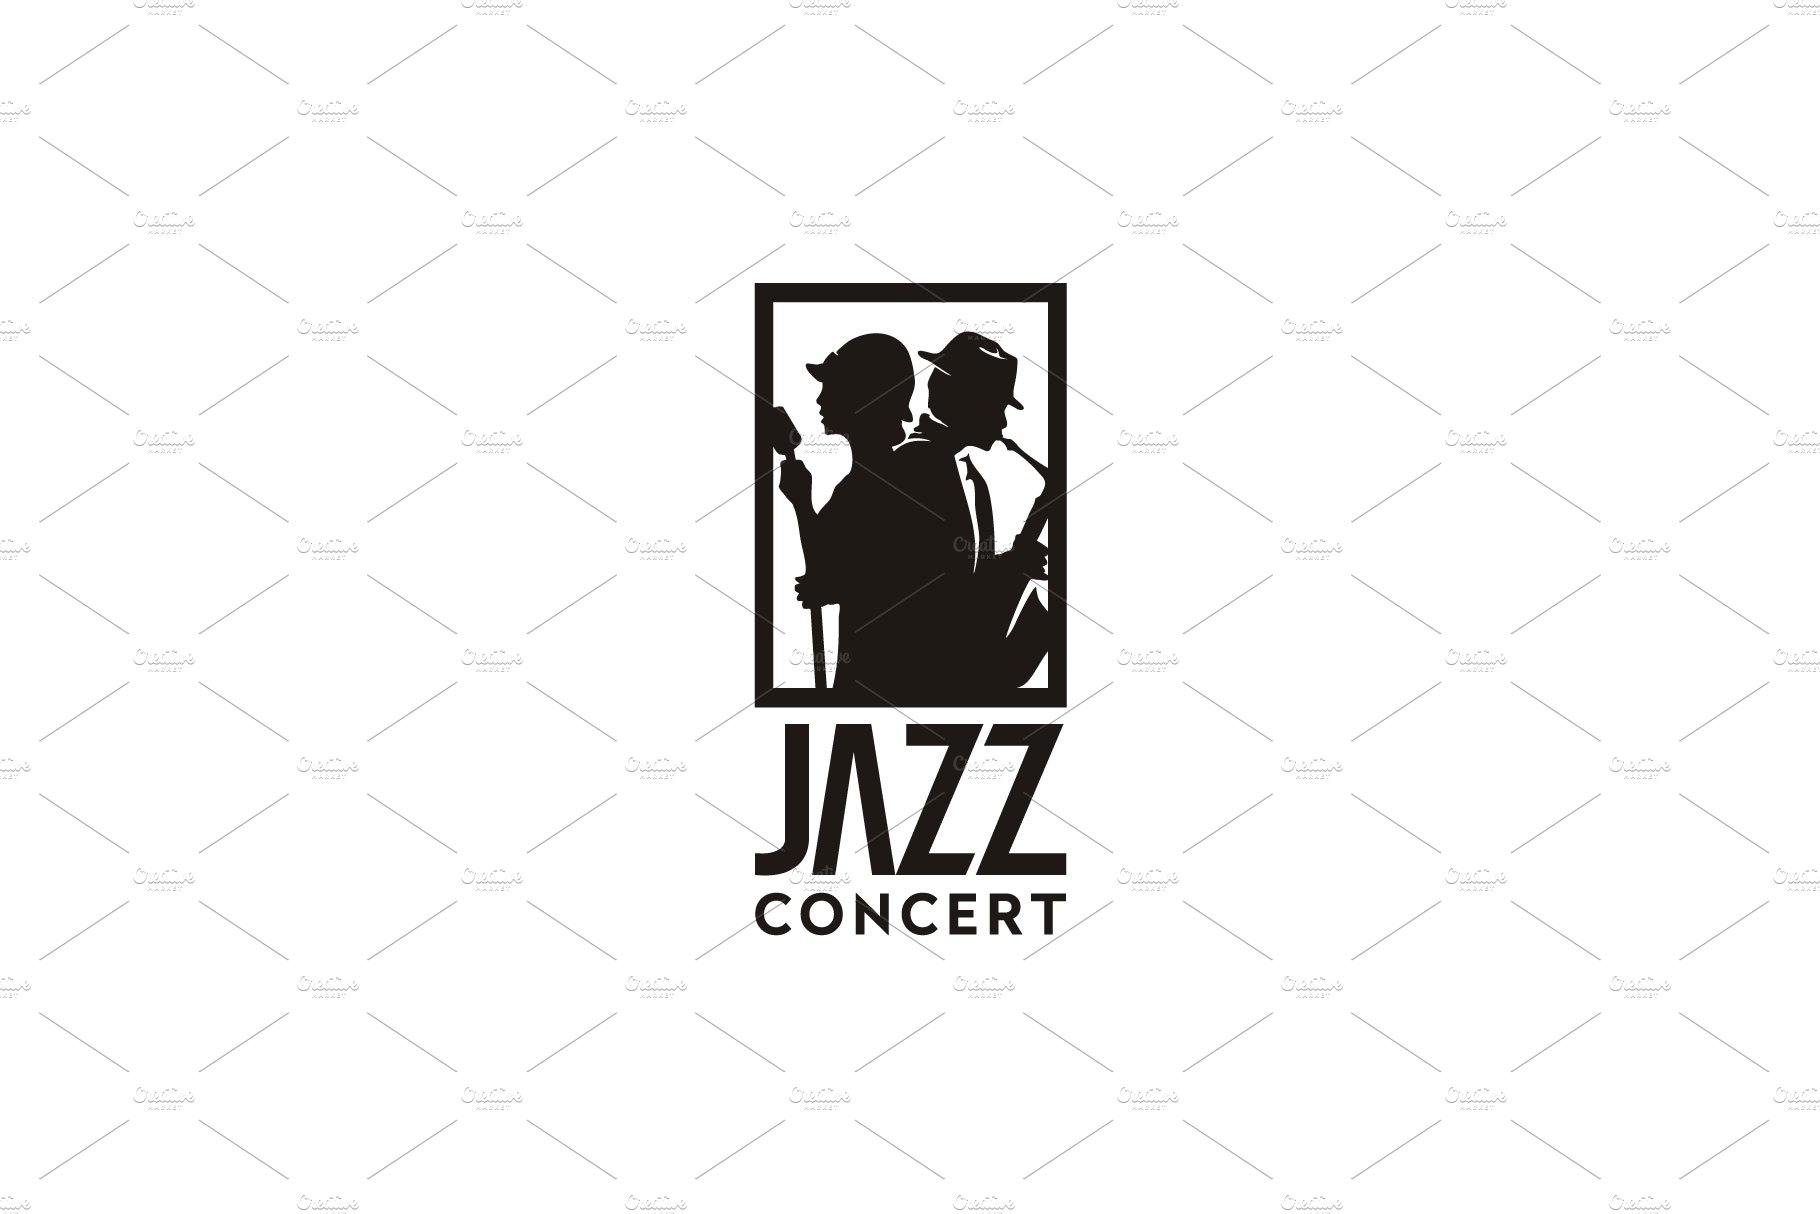 Saxophone, Singing, Jazz Music Logo cover image.